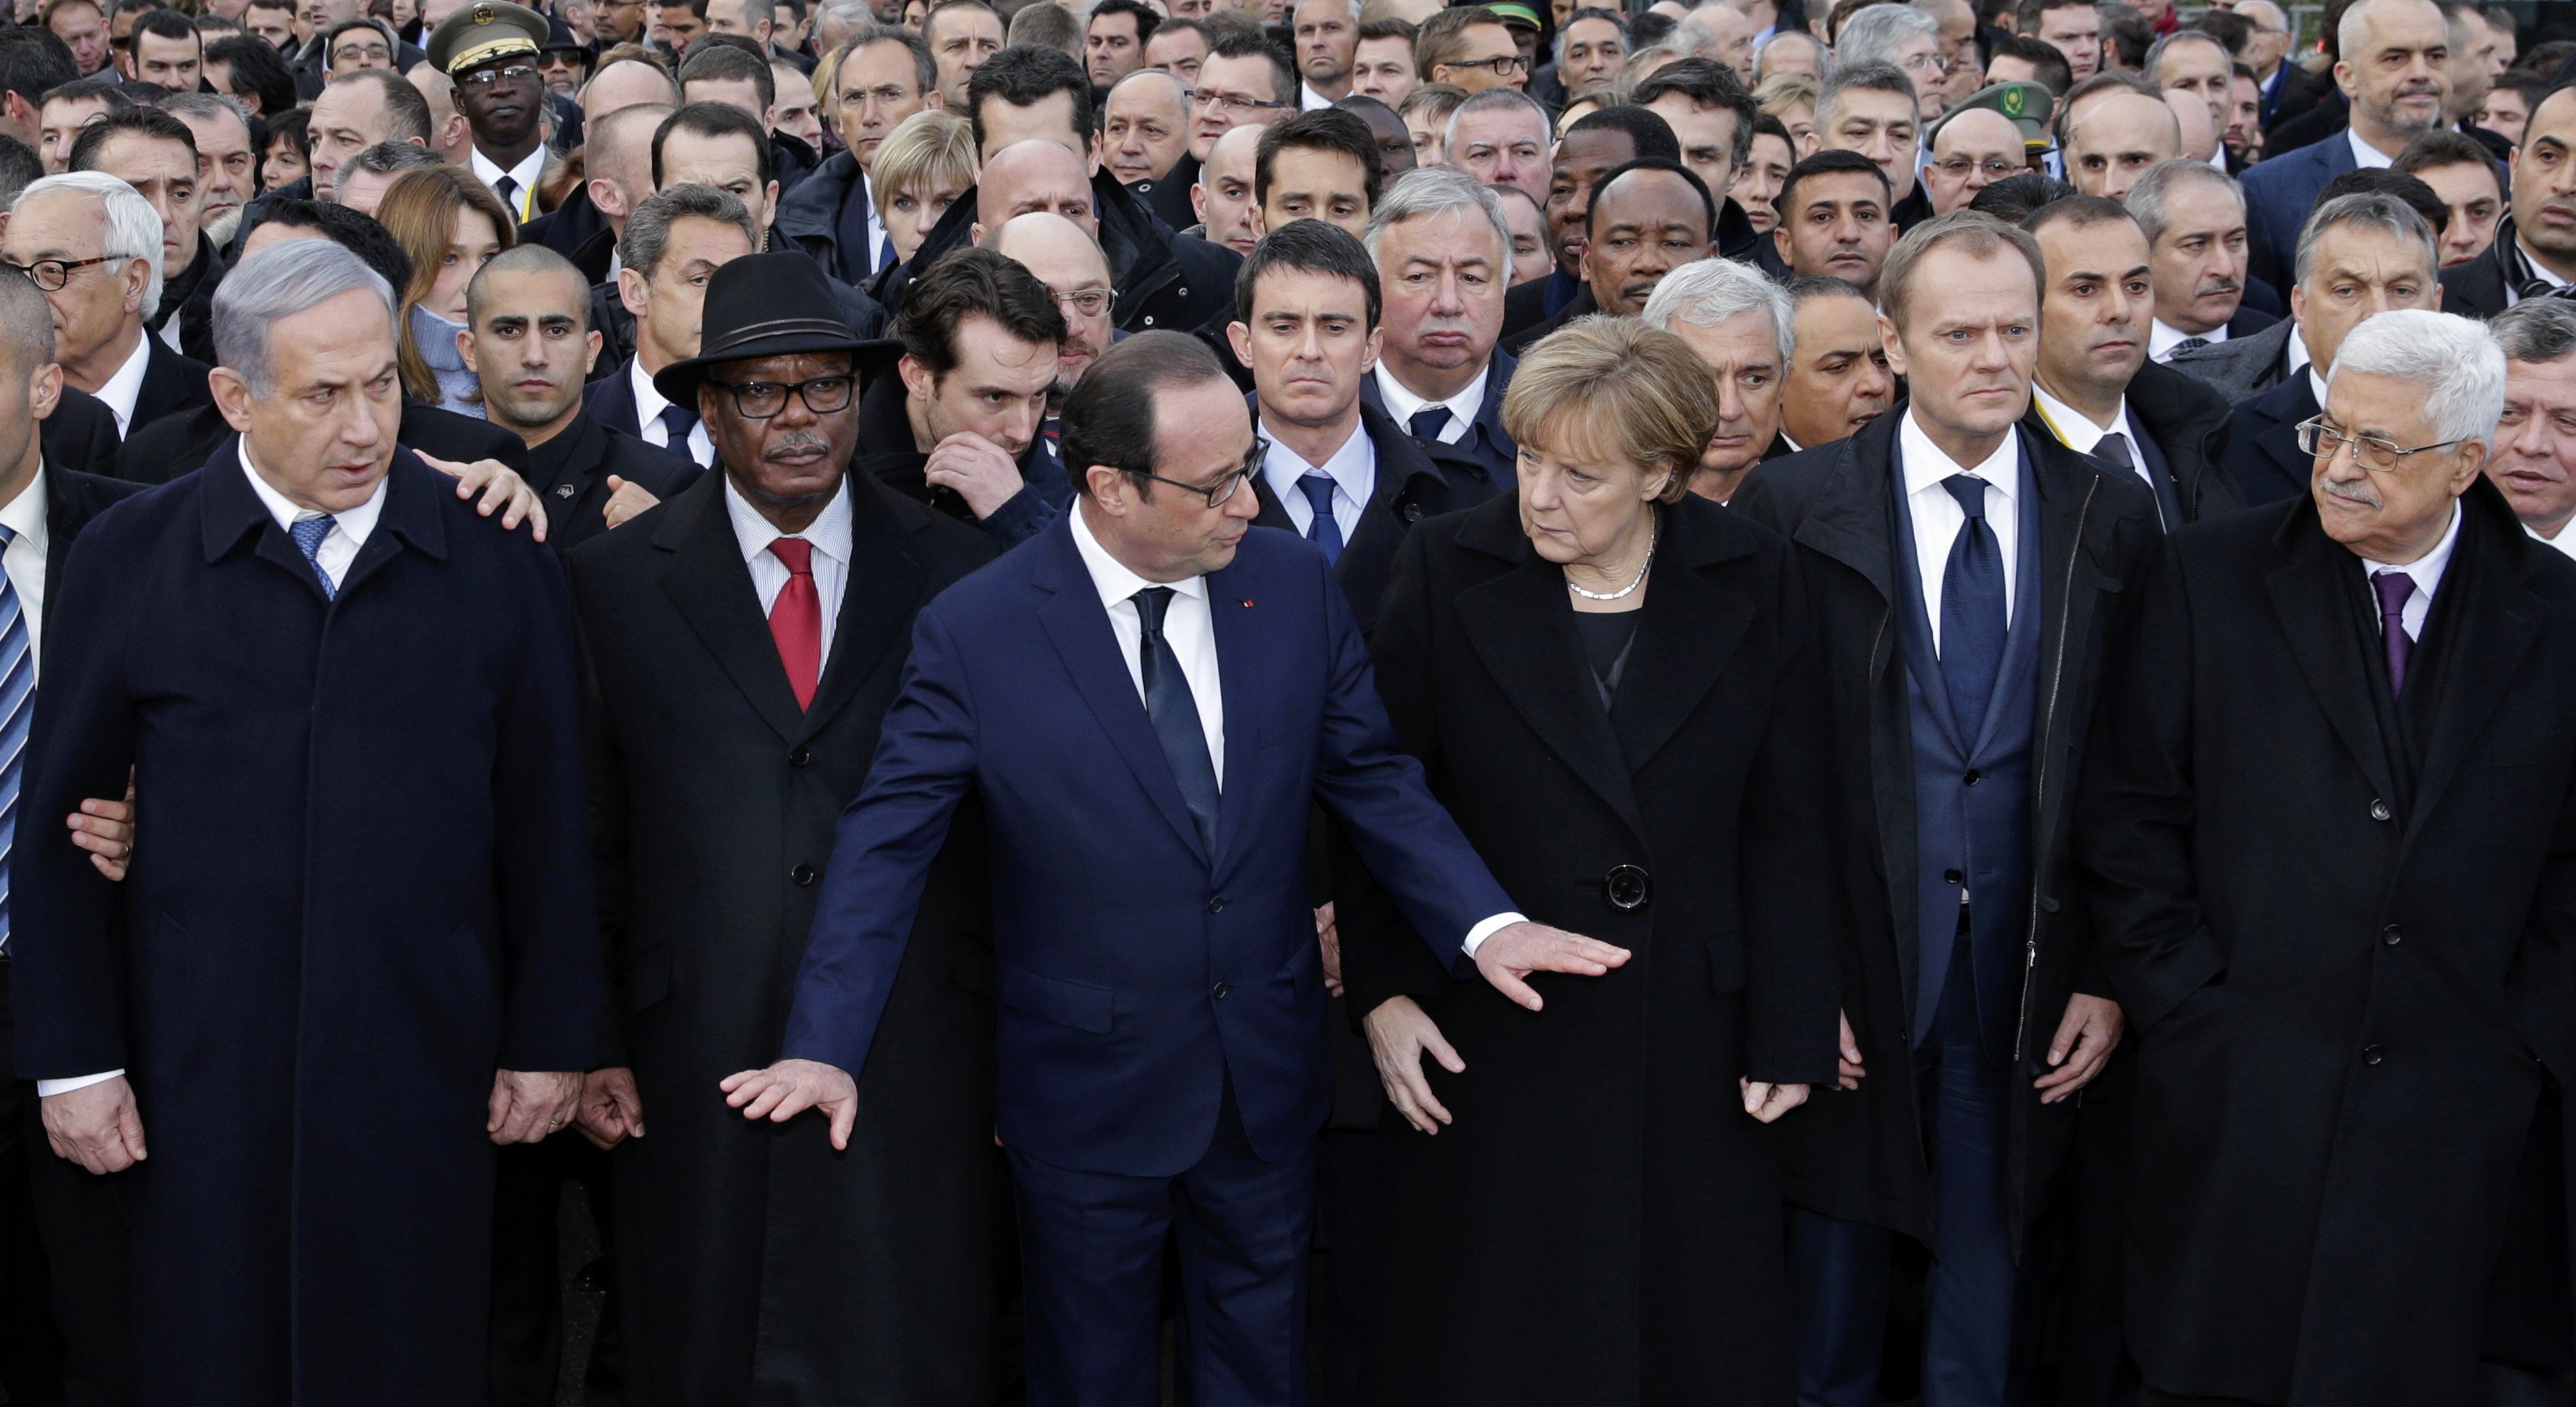 Millions unite against terrorism in historic French demos